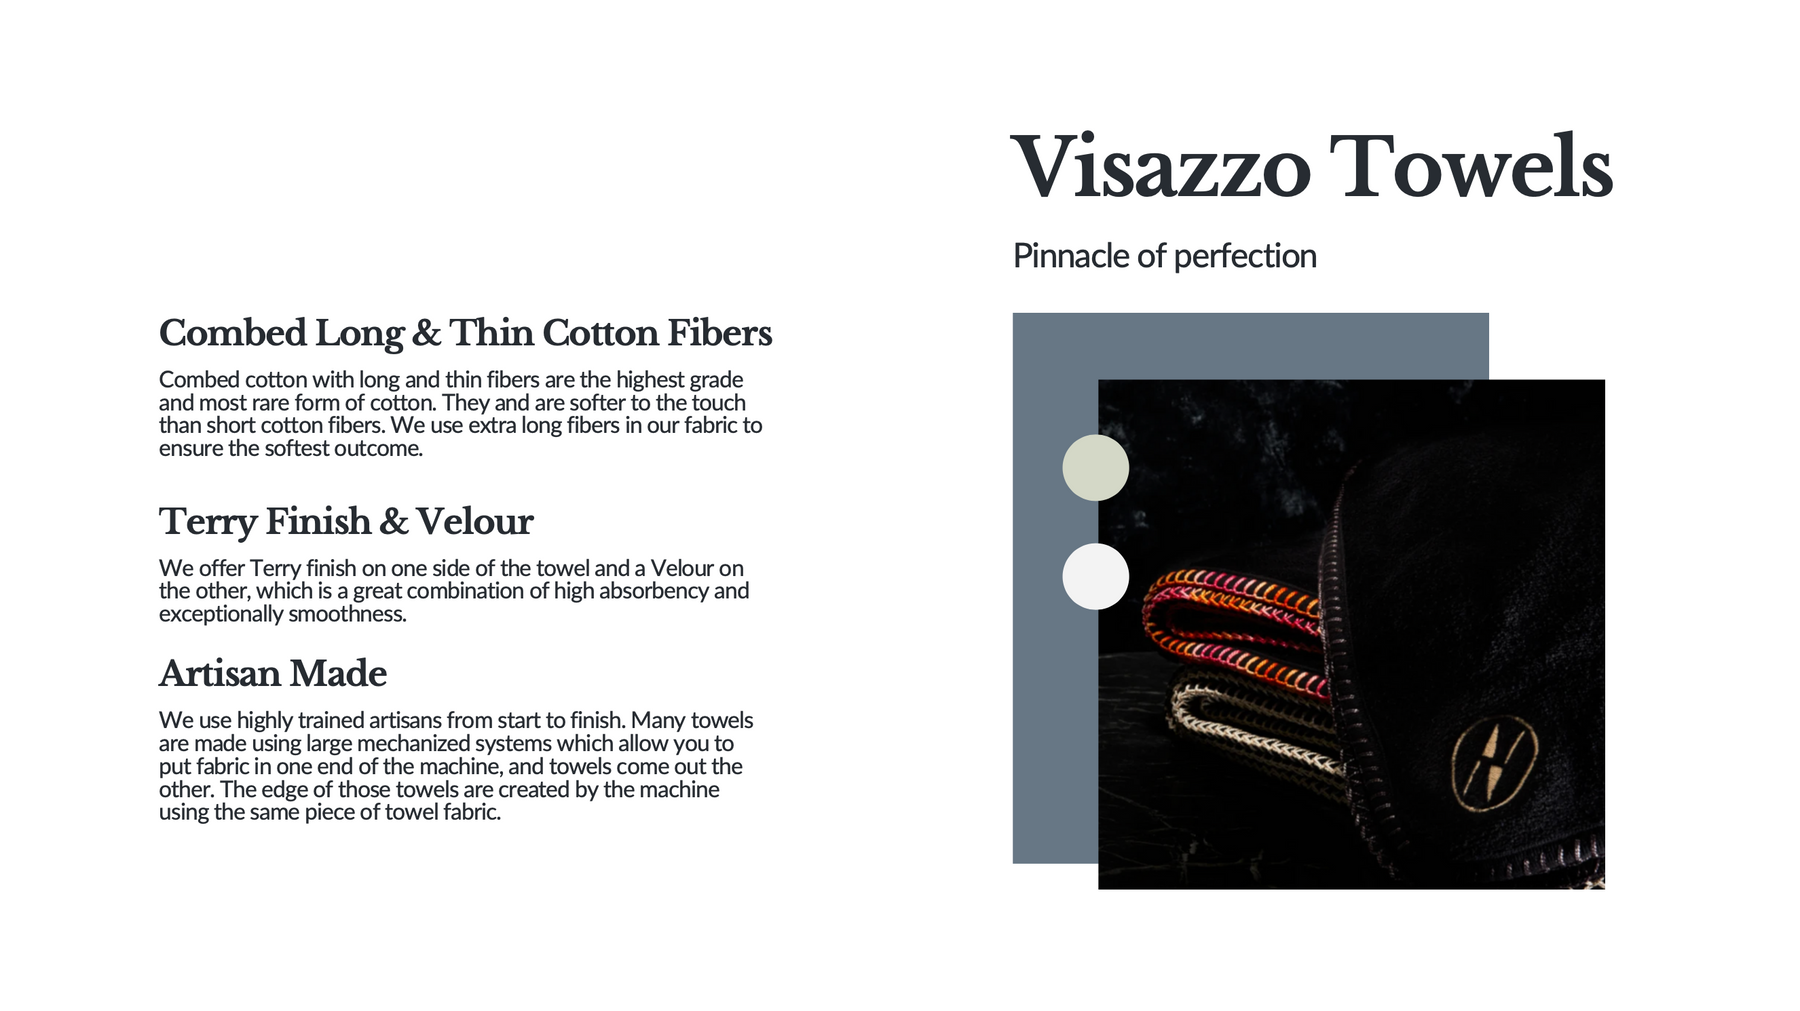 Visazzo black towel image with description of cotton fiber, towel finish, and artisanship.